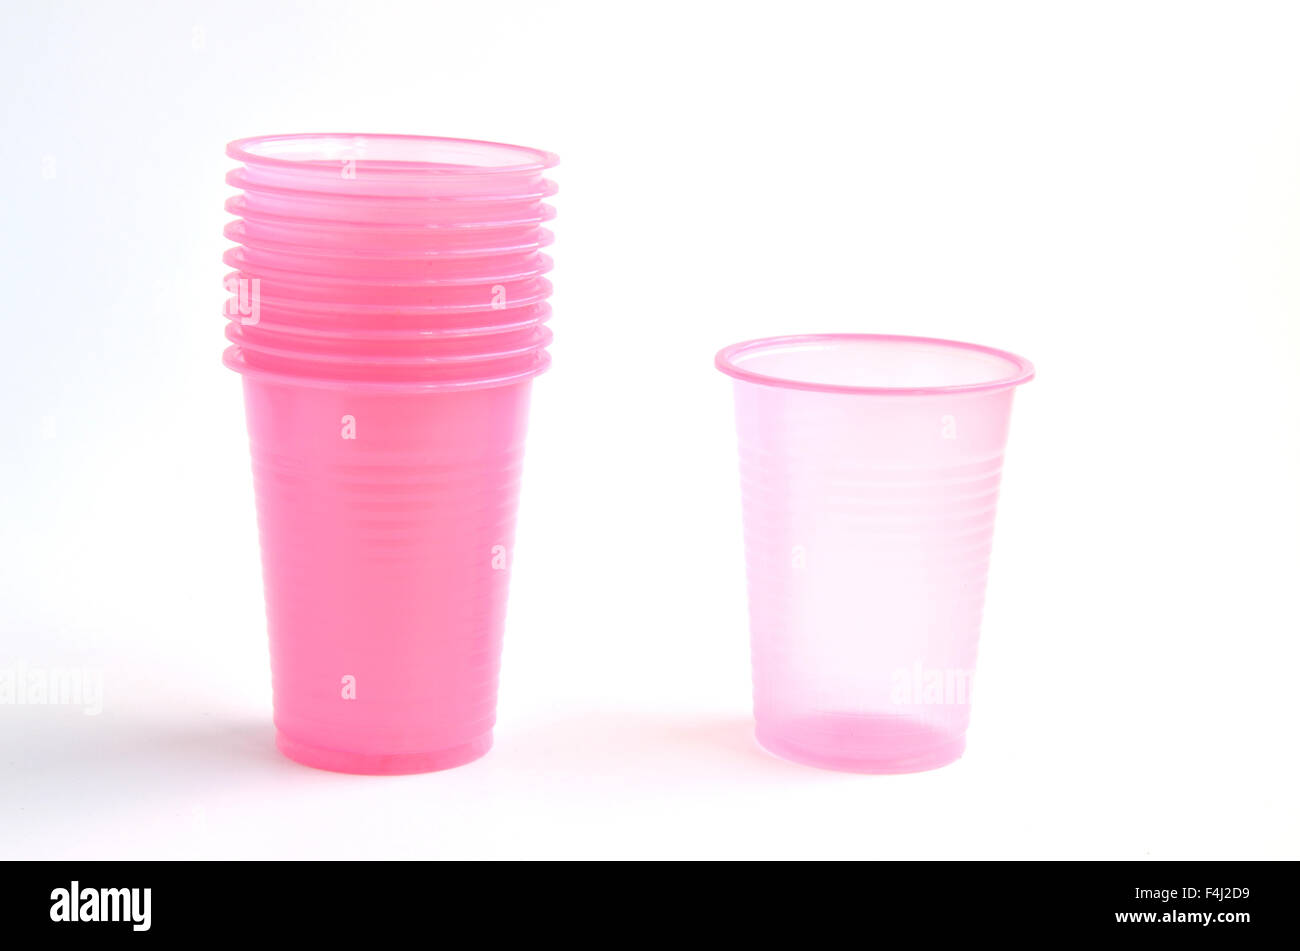 https://c8.alamy.com/comp/F4J2D9/pile-of-pink-plastic-glasses-with-one-detached-beside-F4J2D9.jpg